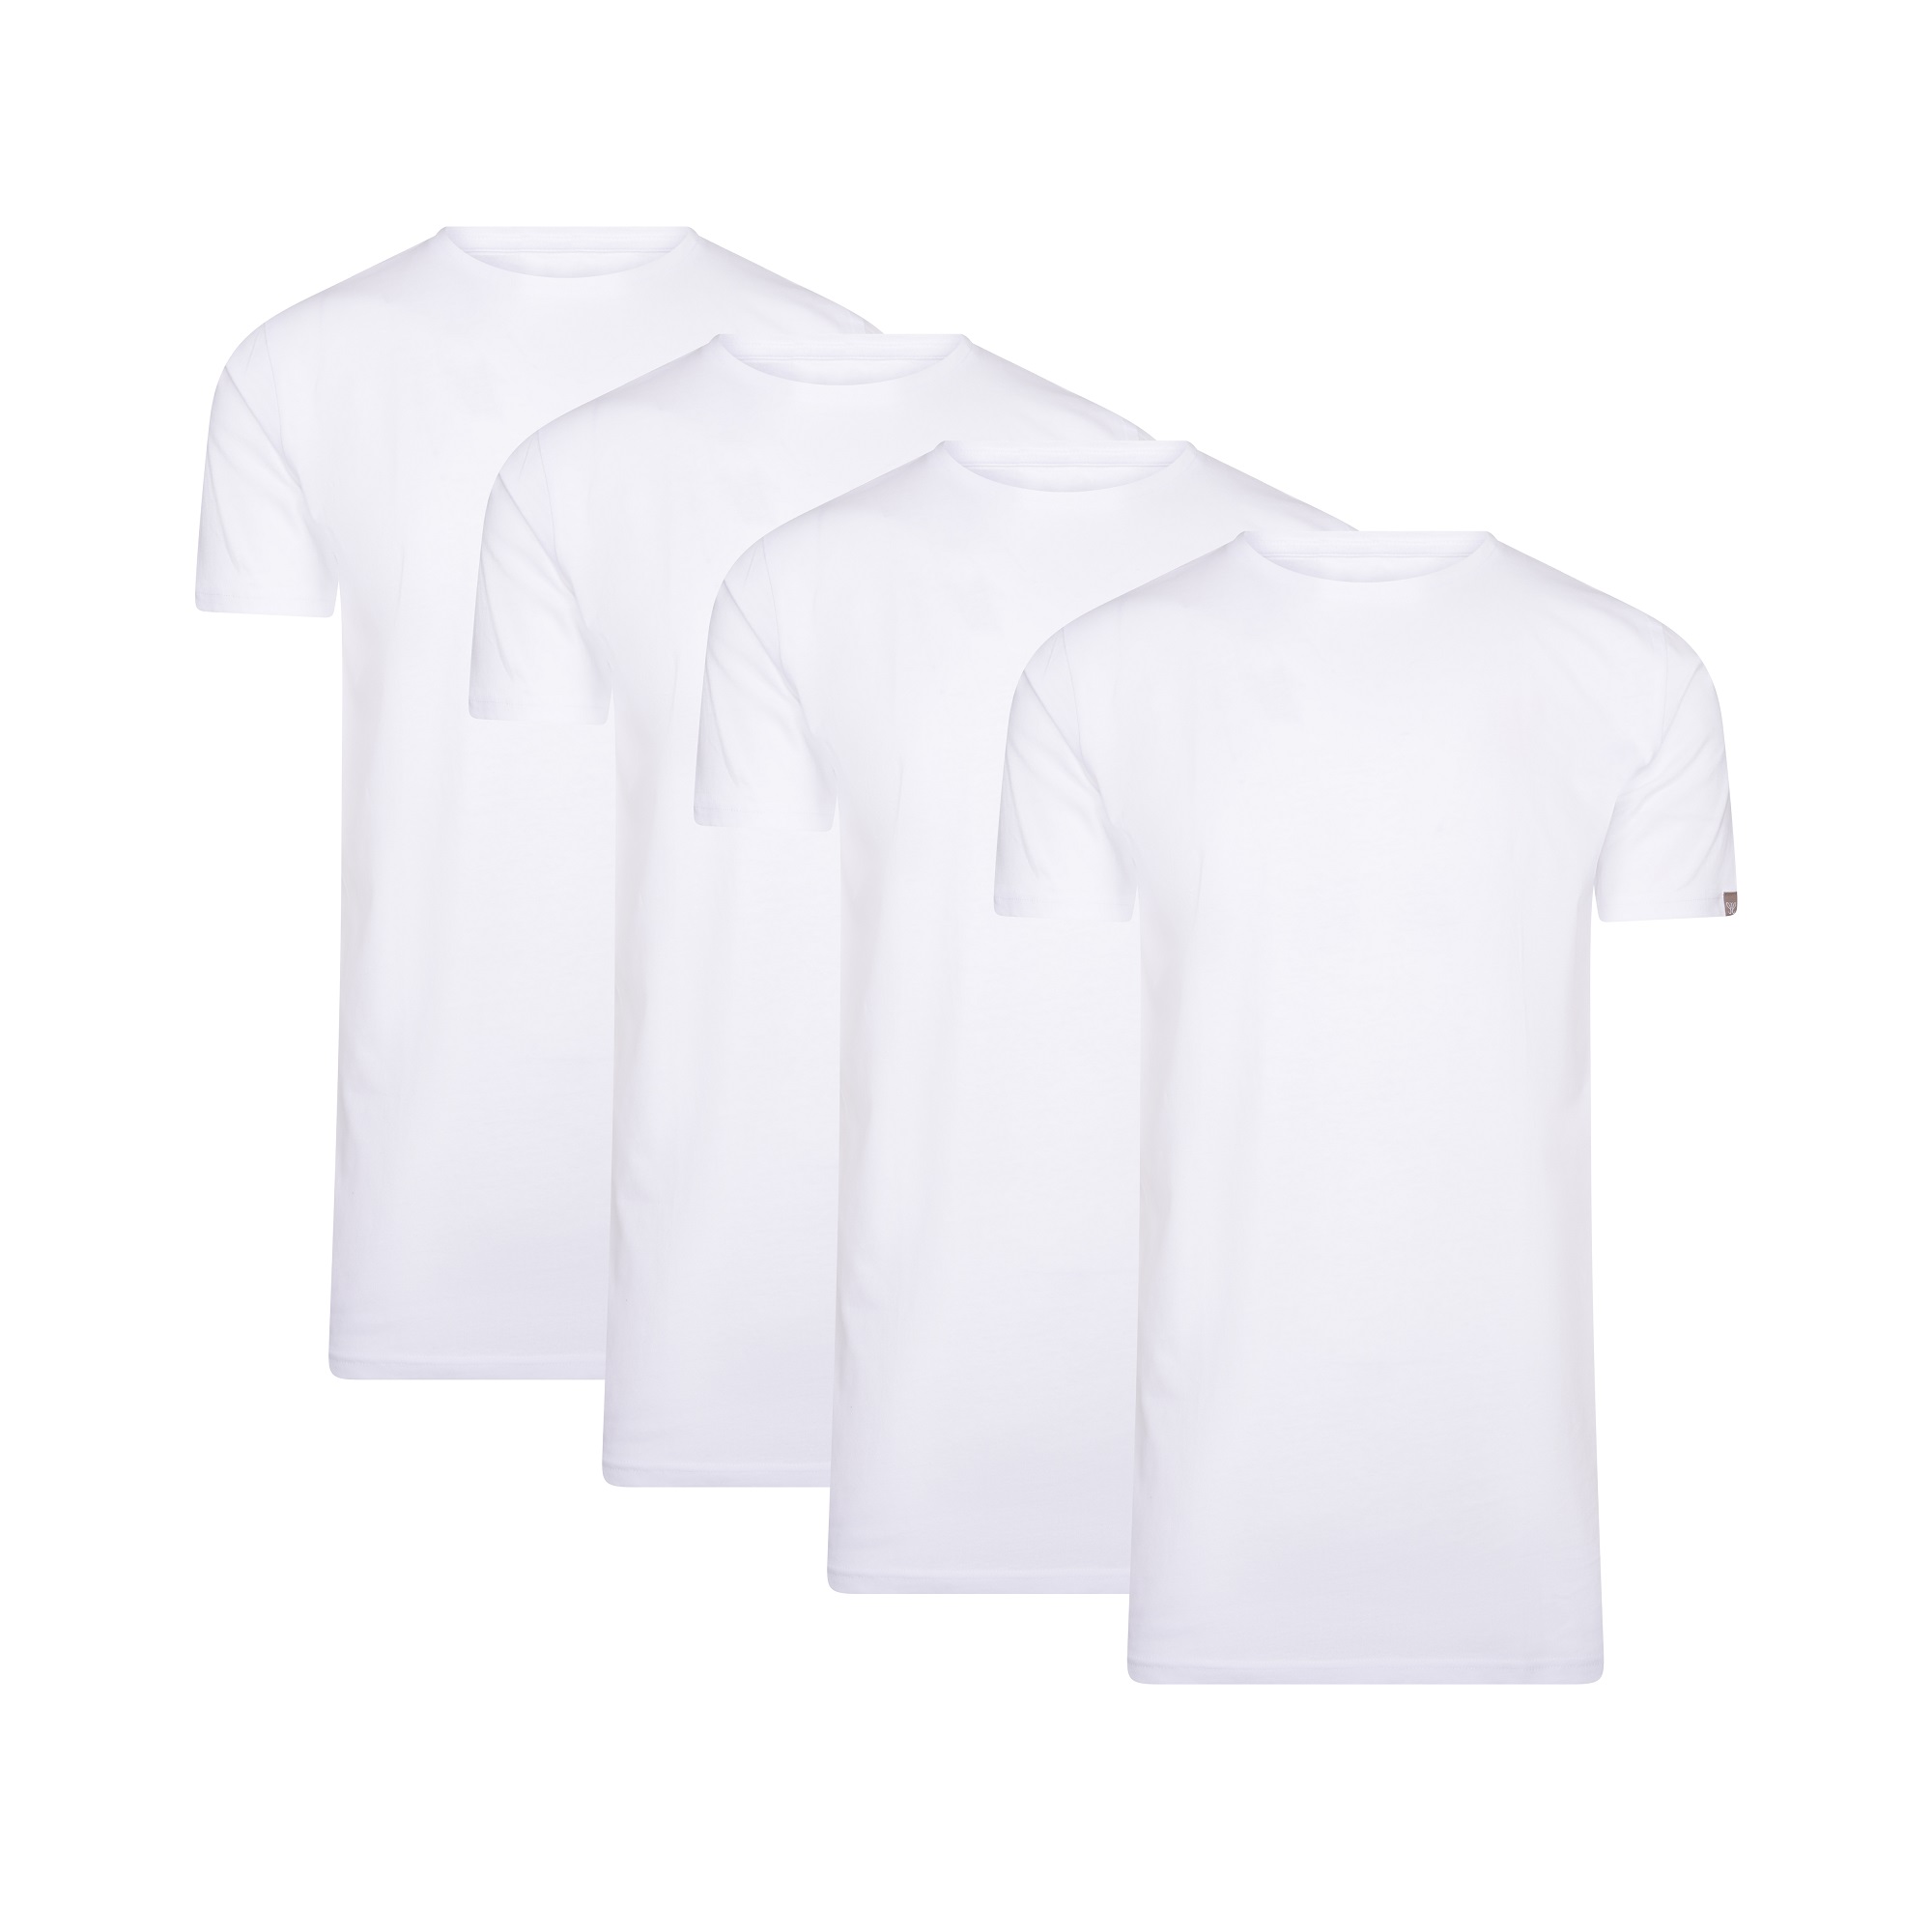 4-Pack T-shirts